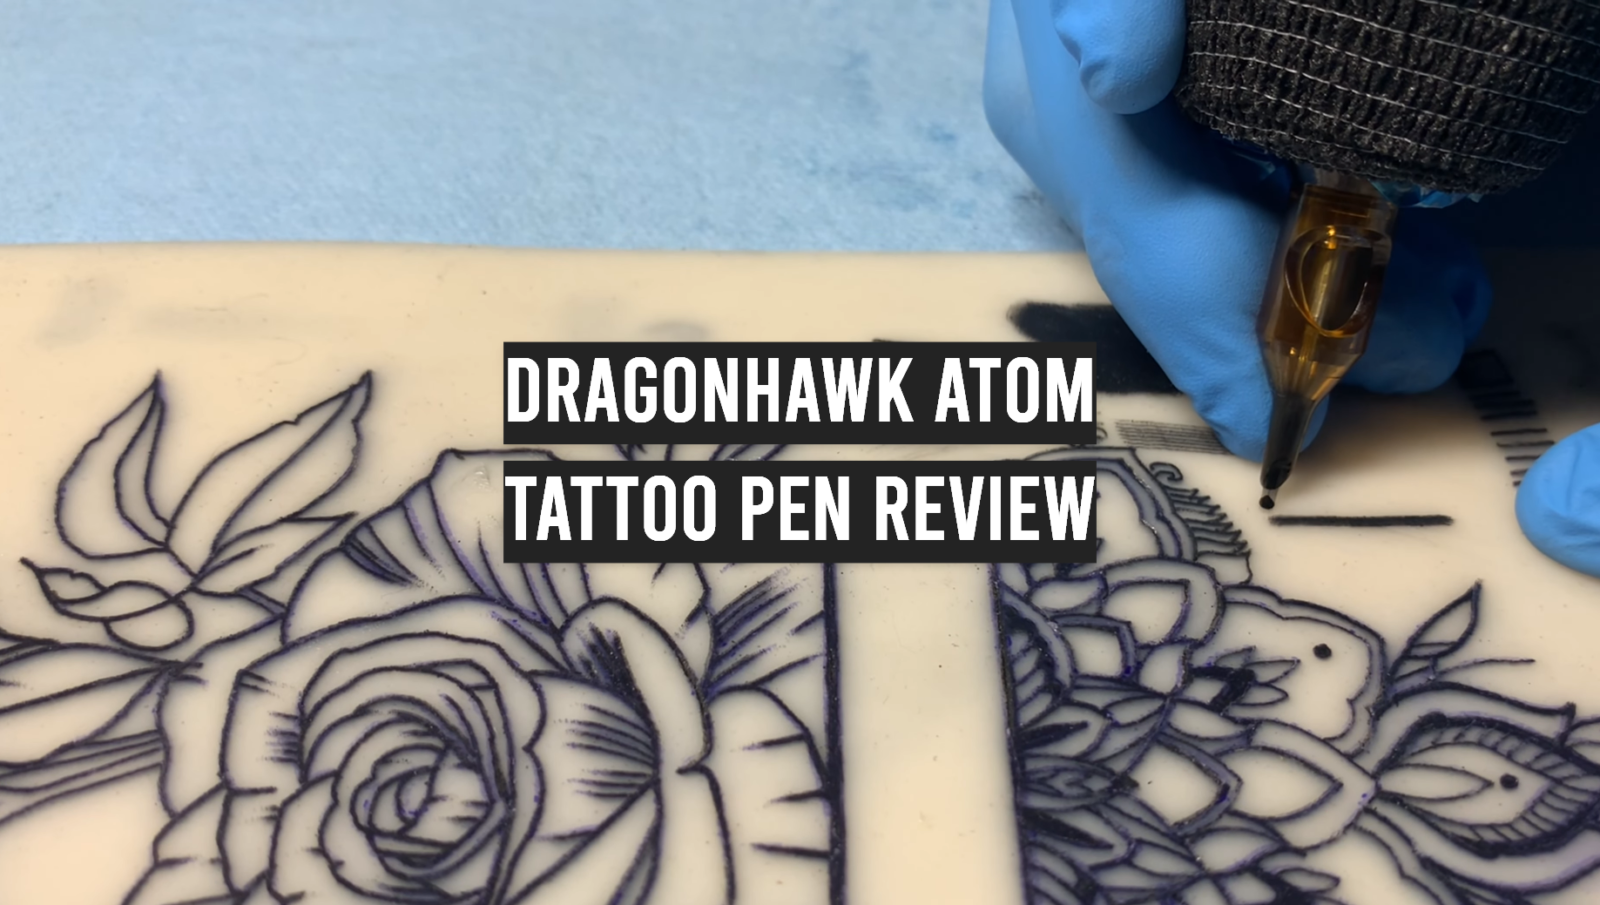 Dragonhawk Atom Tattoo Pen Review